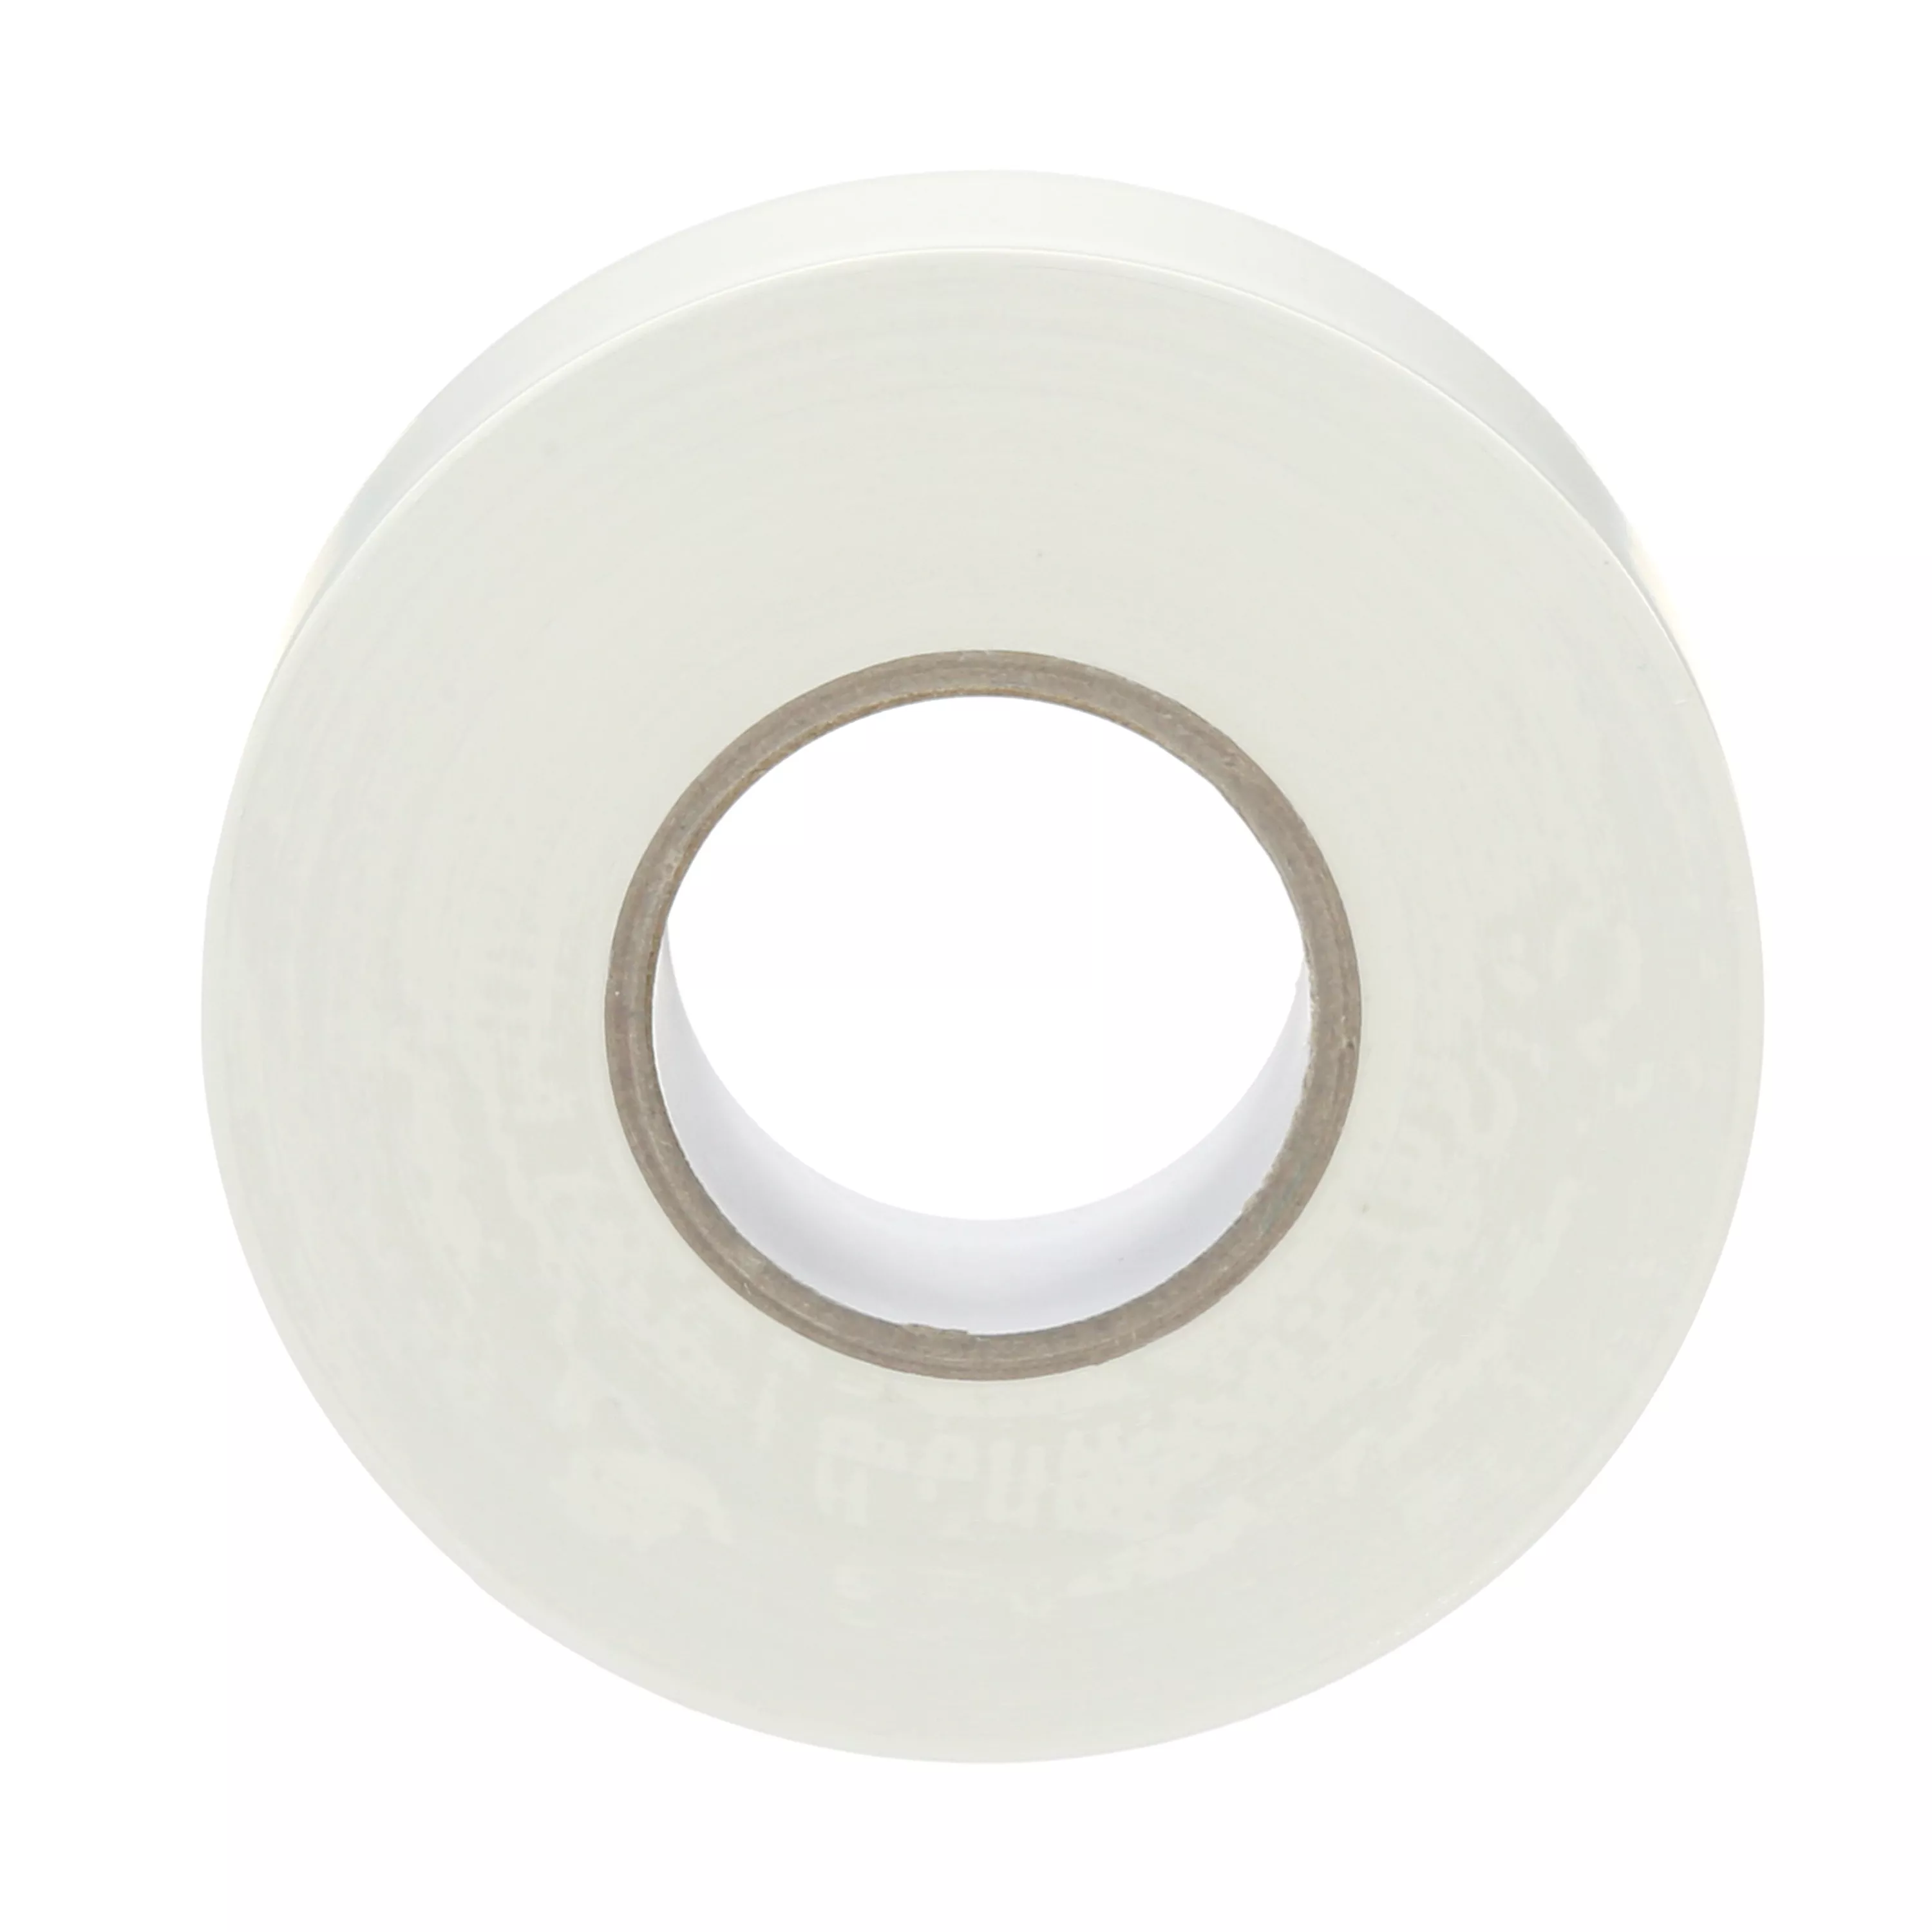 SKU 7100043868 | 3M™ Selfwound PVC Tape 1506R